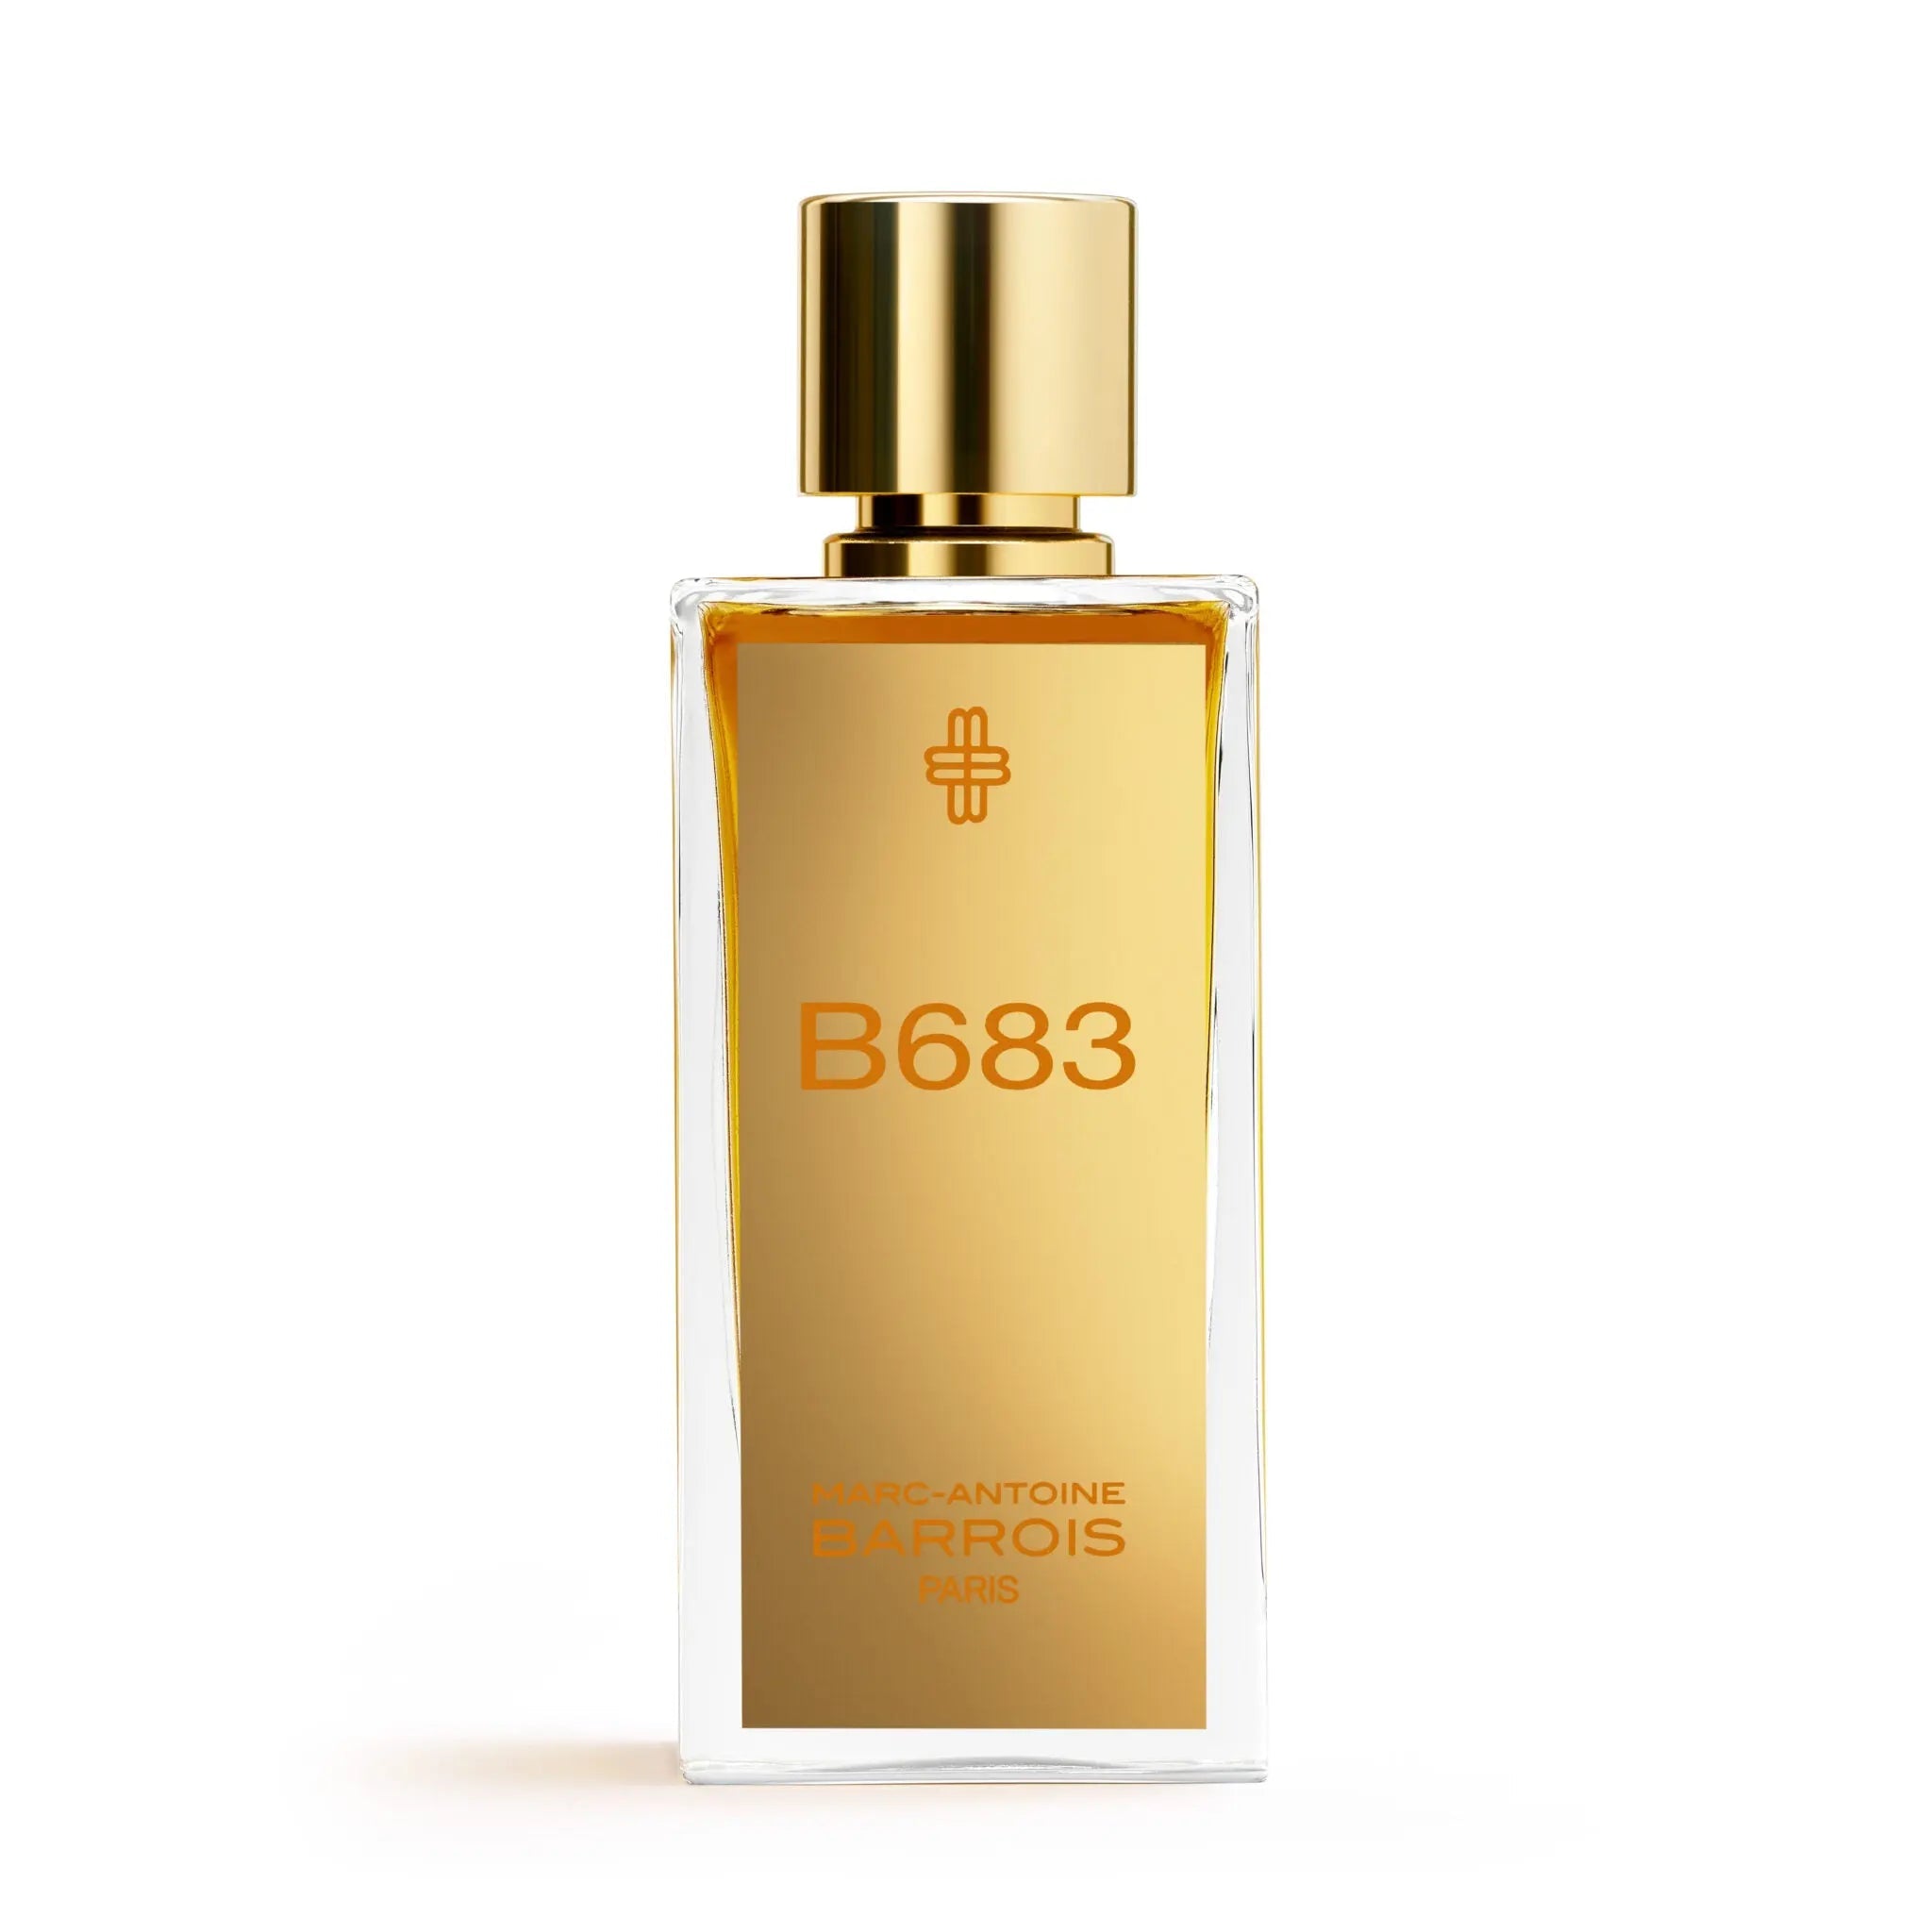 Barrois B683 agua de perfume - 30 ml